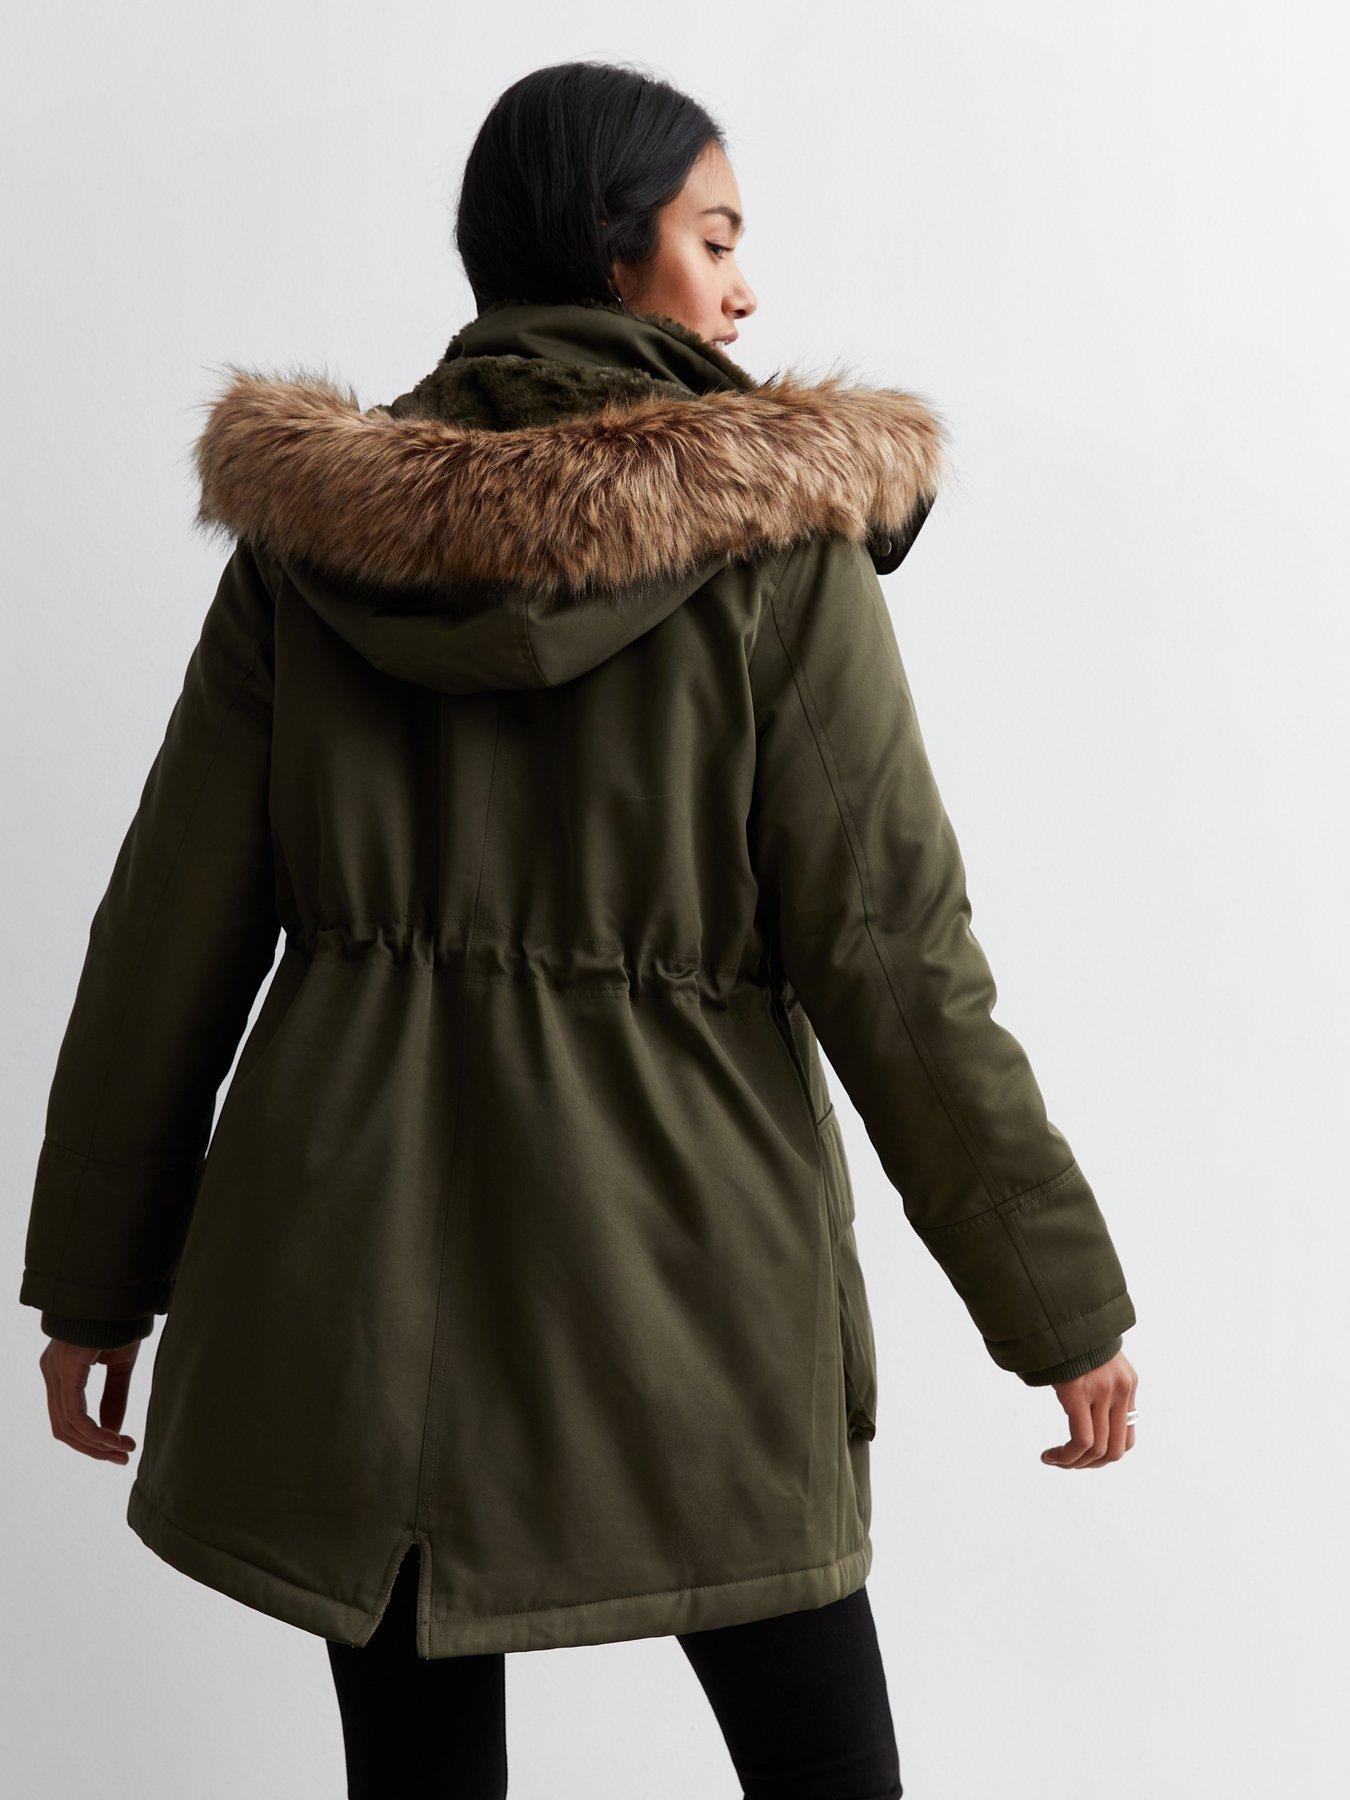 New Look Khaki Faux Fur Lined Hooded Parka Jacket